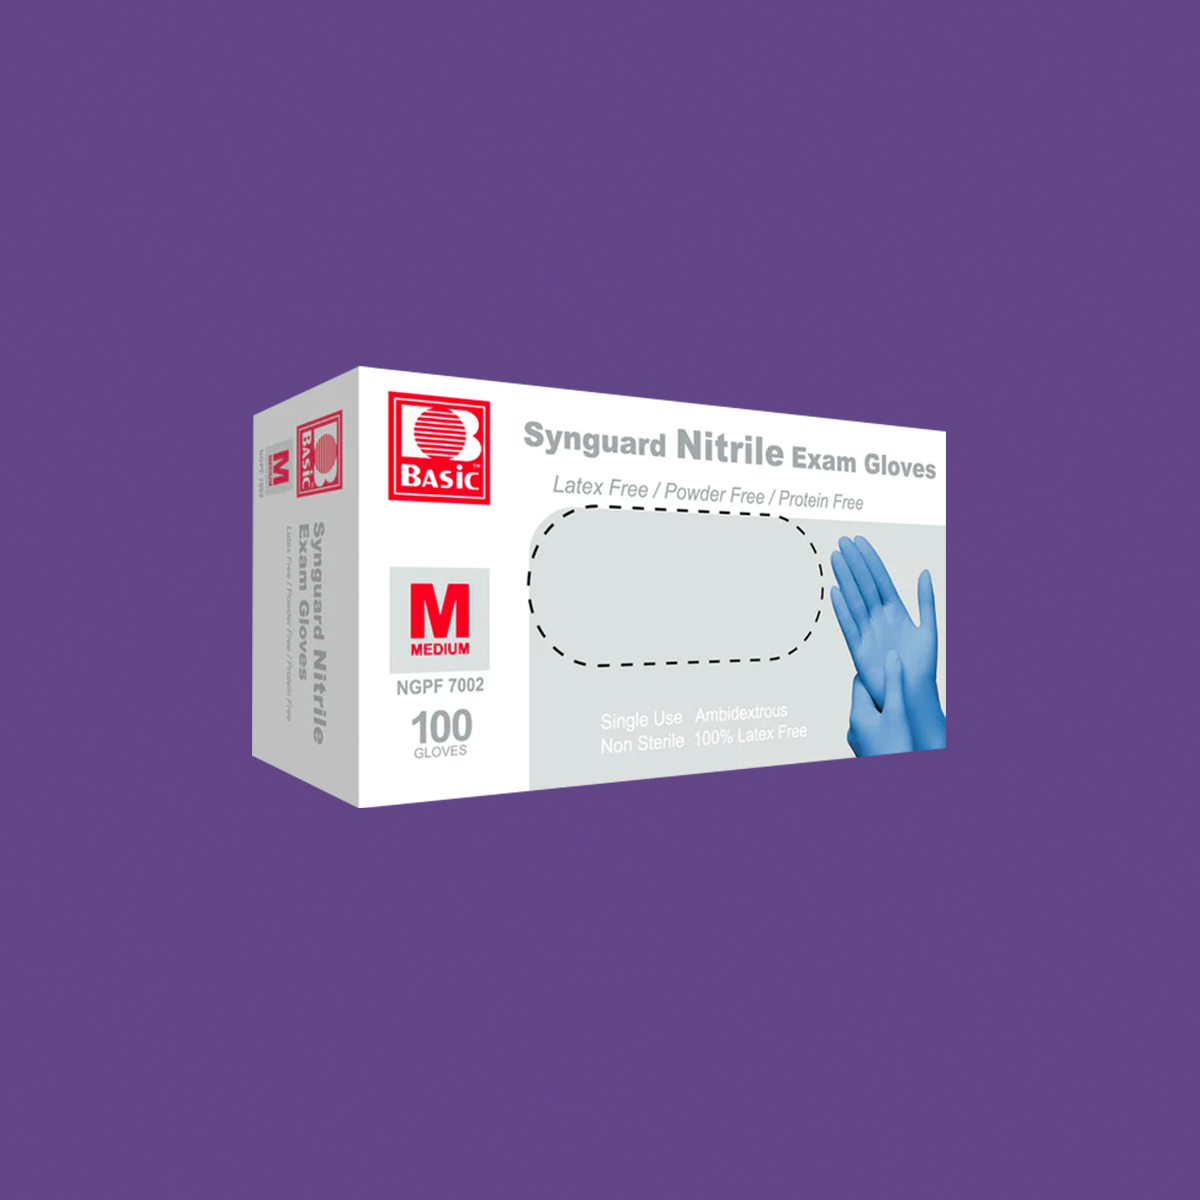 Synguard Medical Blue Nitrile Exam Gloves - Latex-Free & Powder-Free 100-pack (Medium)